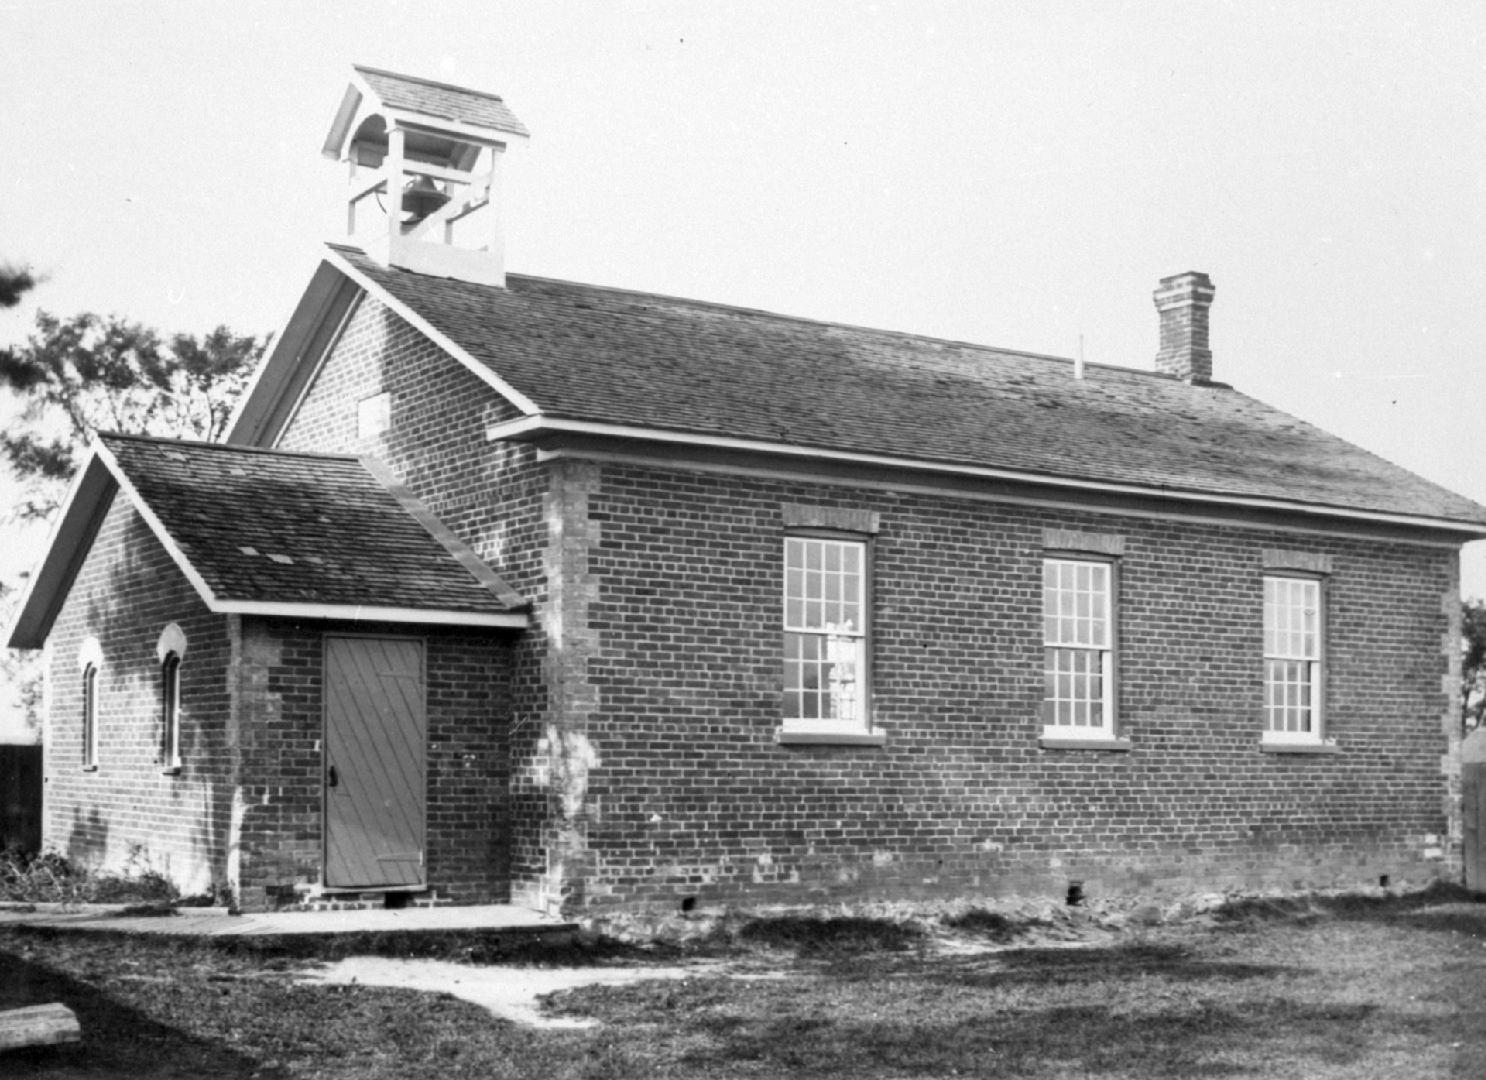 Second Don School, built in 1853